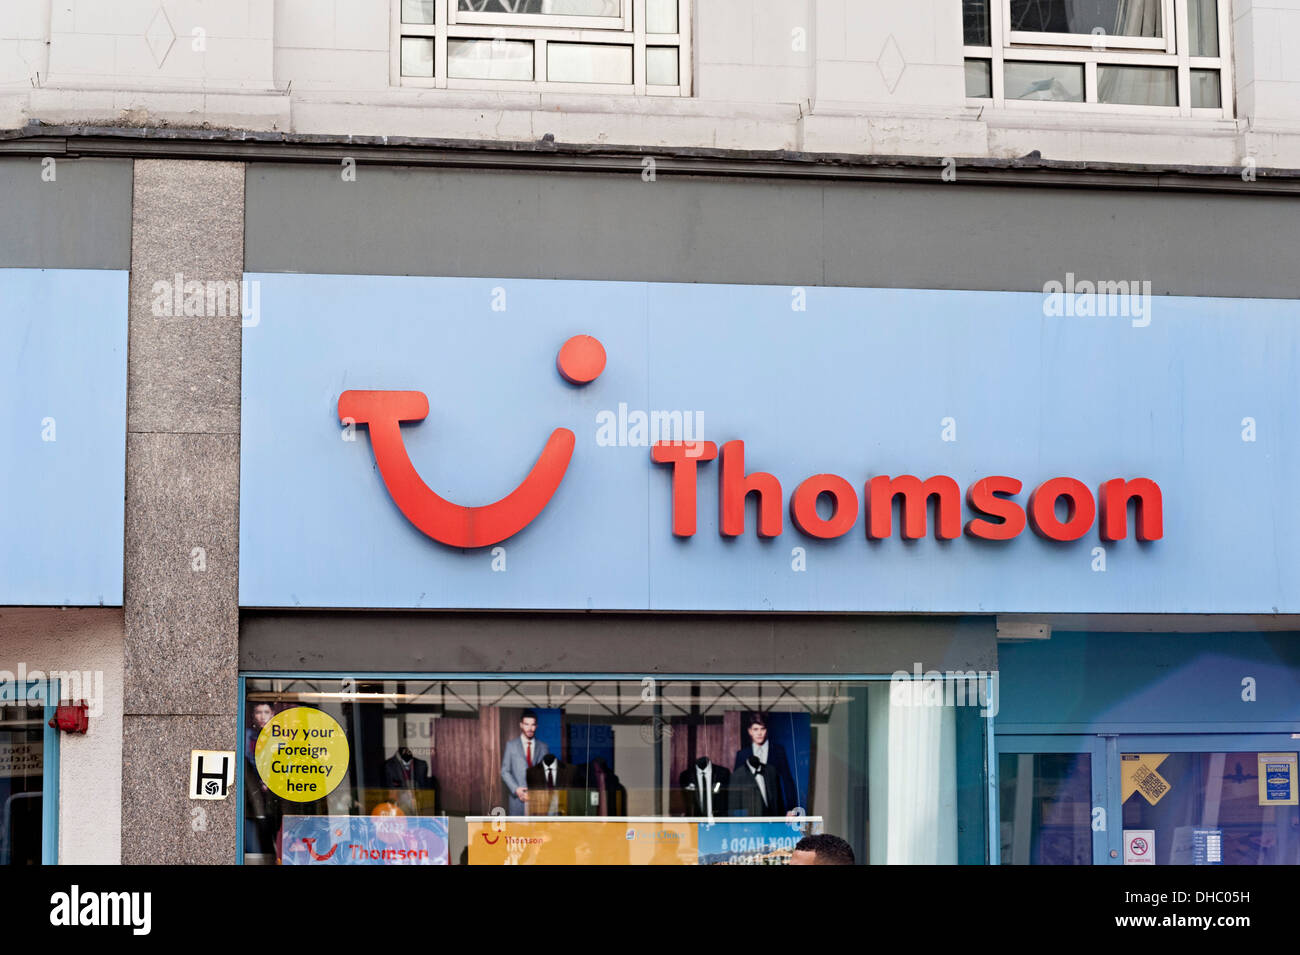 Thomson travel agent sign Birmingham Stock Photo